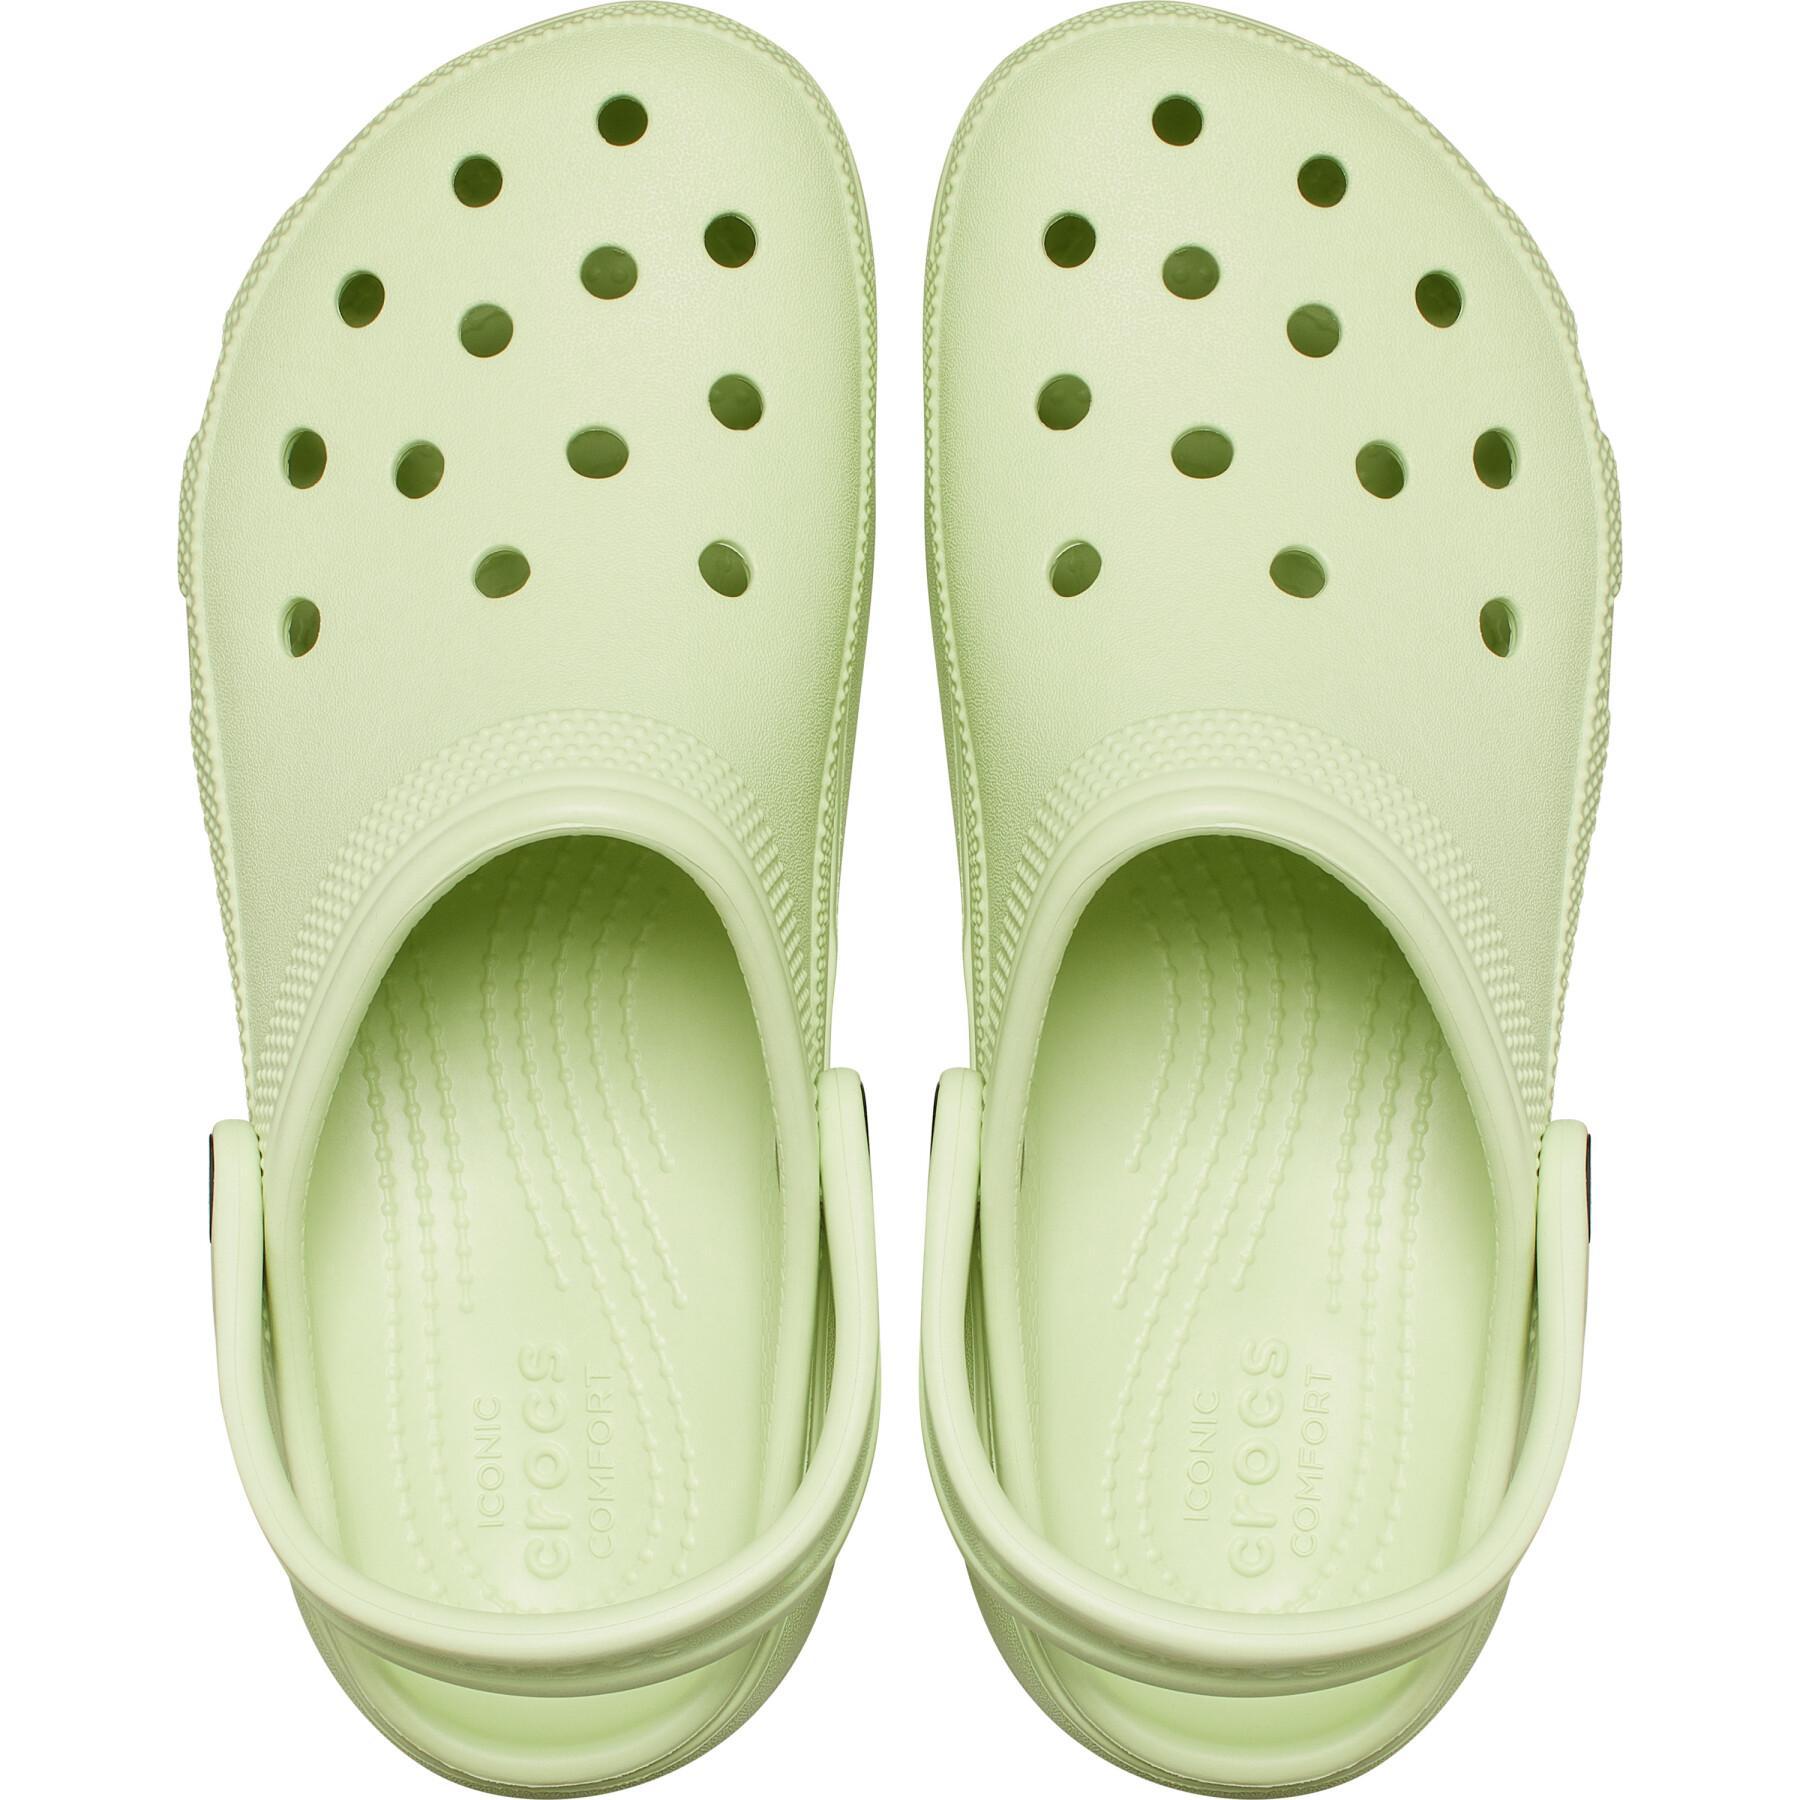 Women's classic platform clogs Crocs